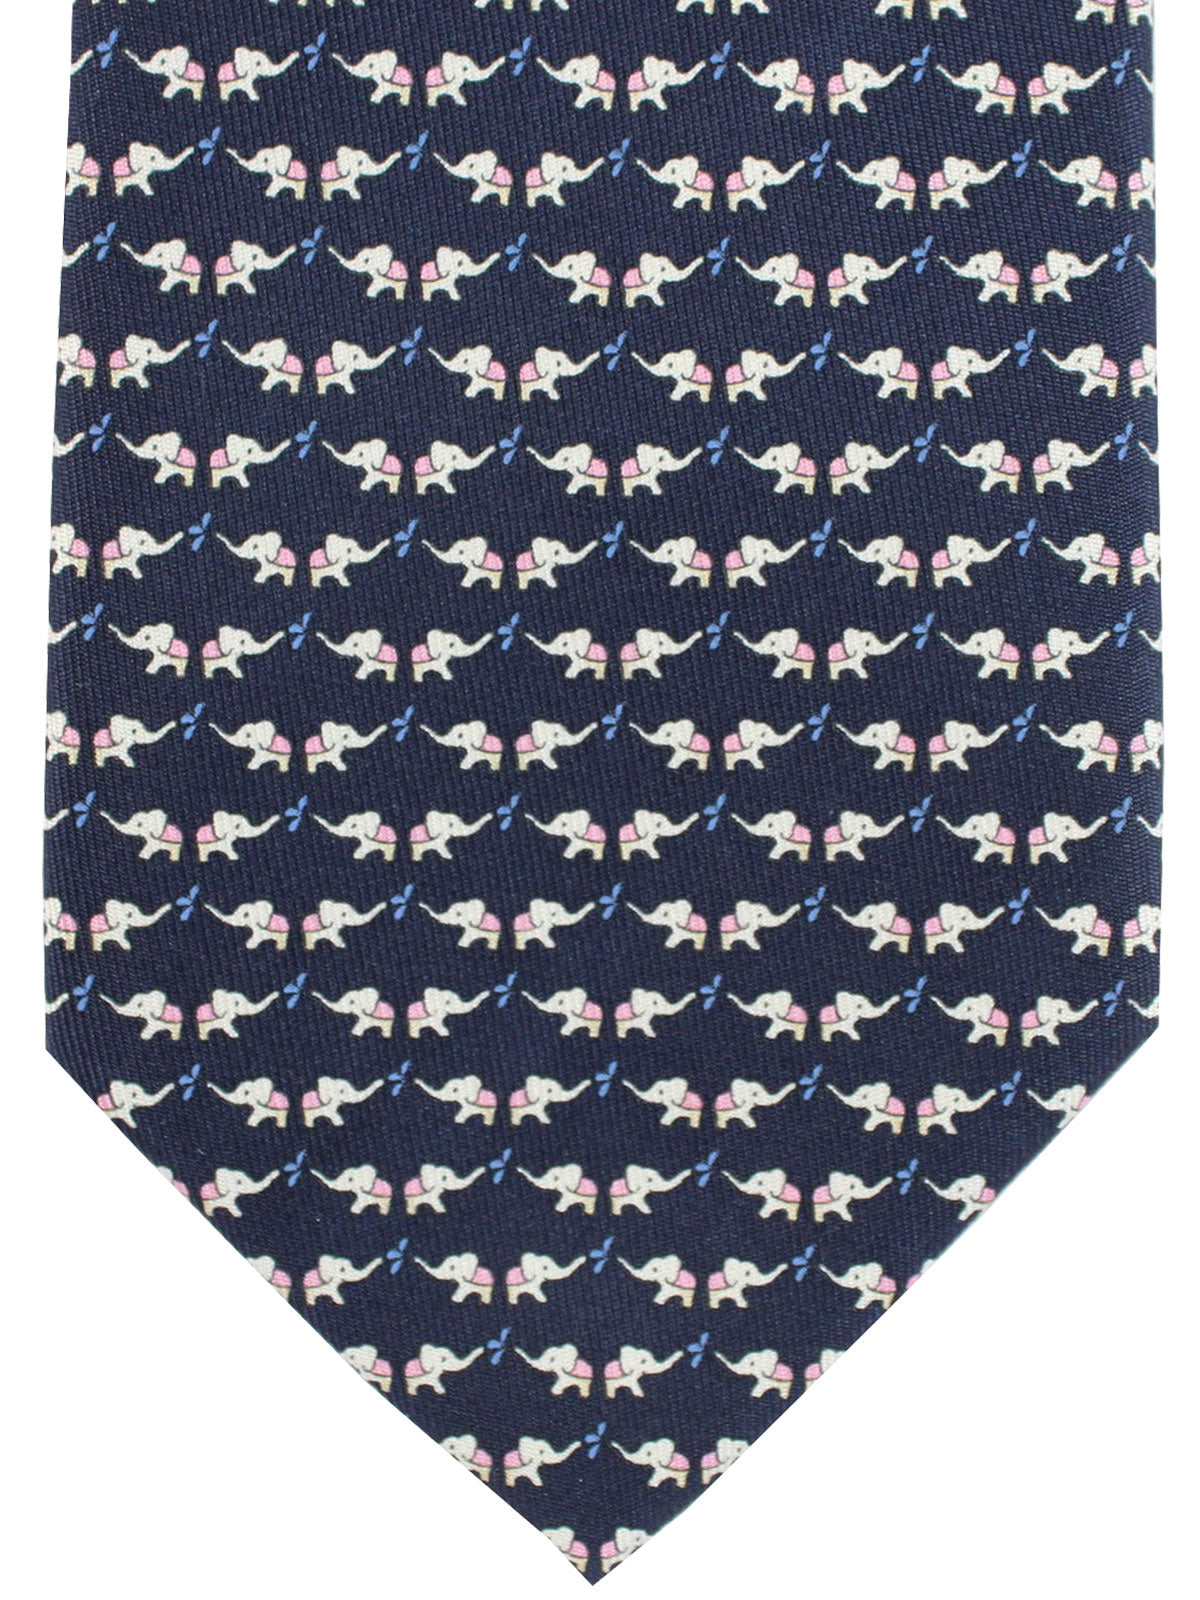 Salvatore Ferragamo Tie Navy Elephant Design Novelty